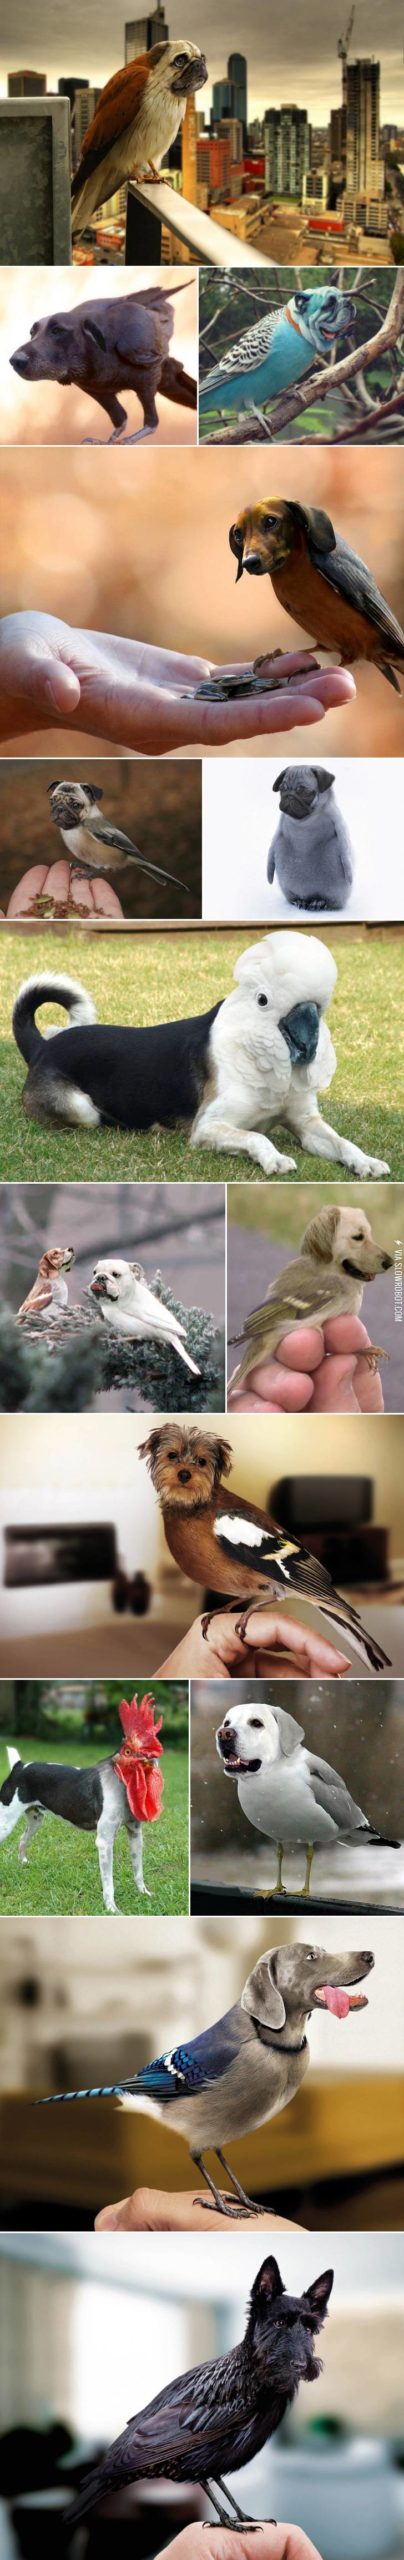 Dog+birds.